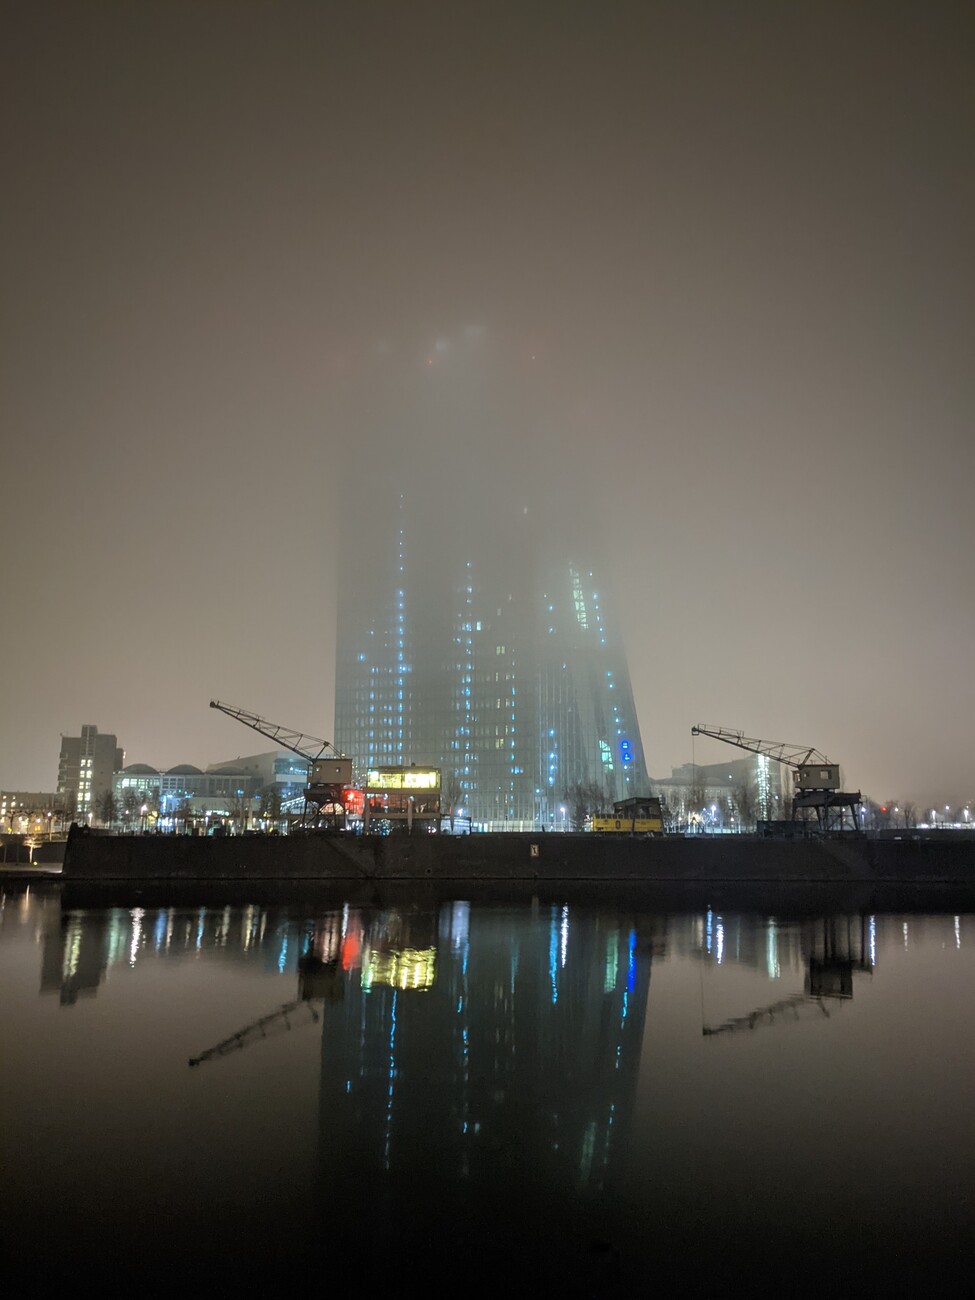 European Central Bank on a foggy day, Frankfurt am Main, Germany.